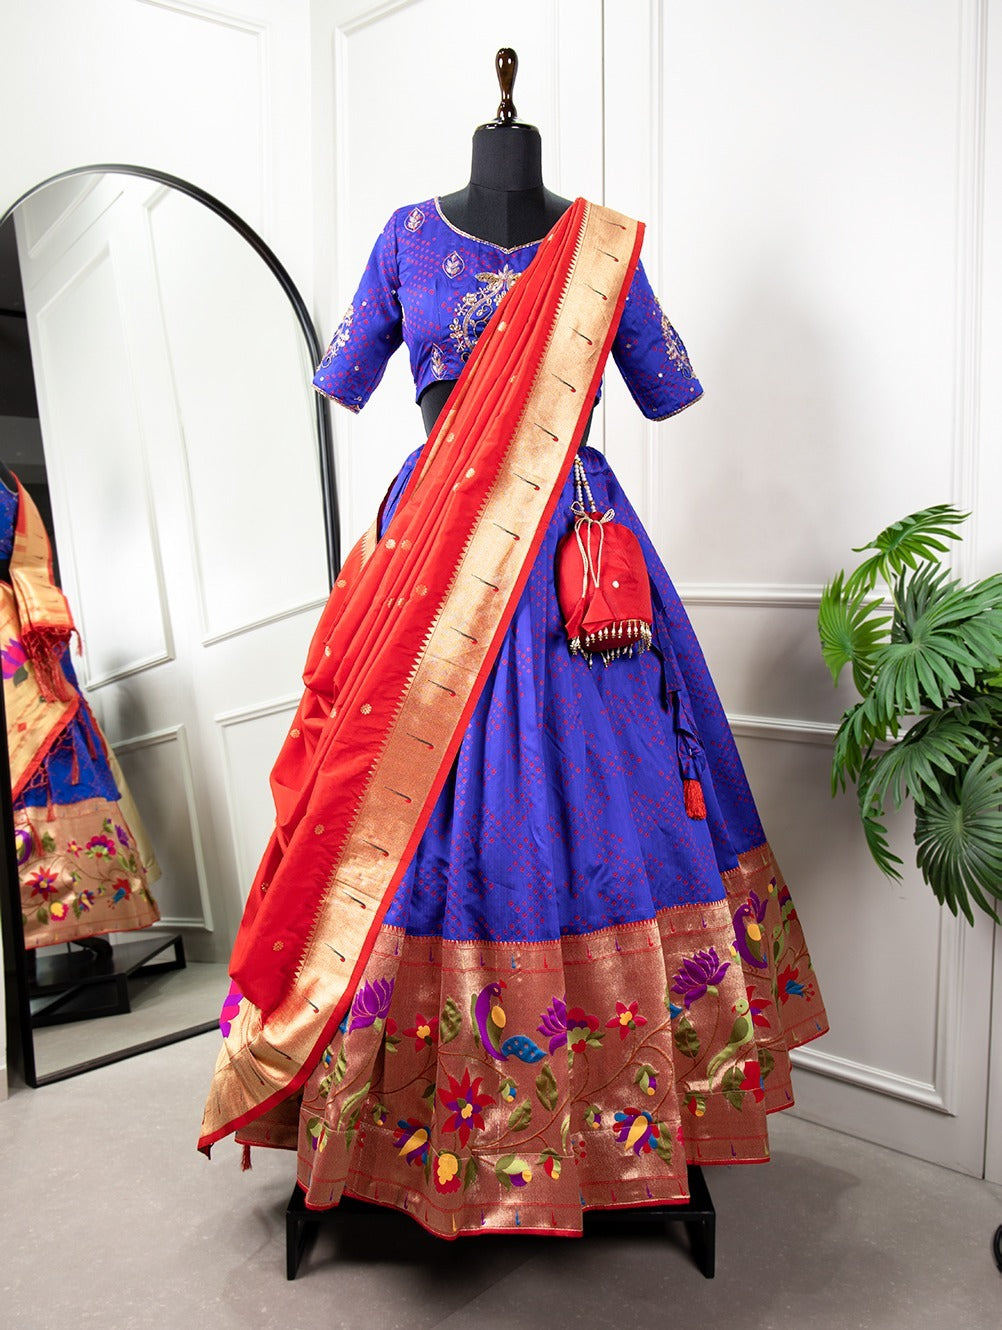 South Indian Traditional Beautiful New Designer Party Wear Kanjivaram Silk  Zari Lehenga at Rs 2049 | Party Wear Lehenga in Surat | ID: 2850805950873